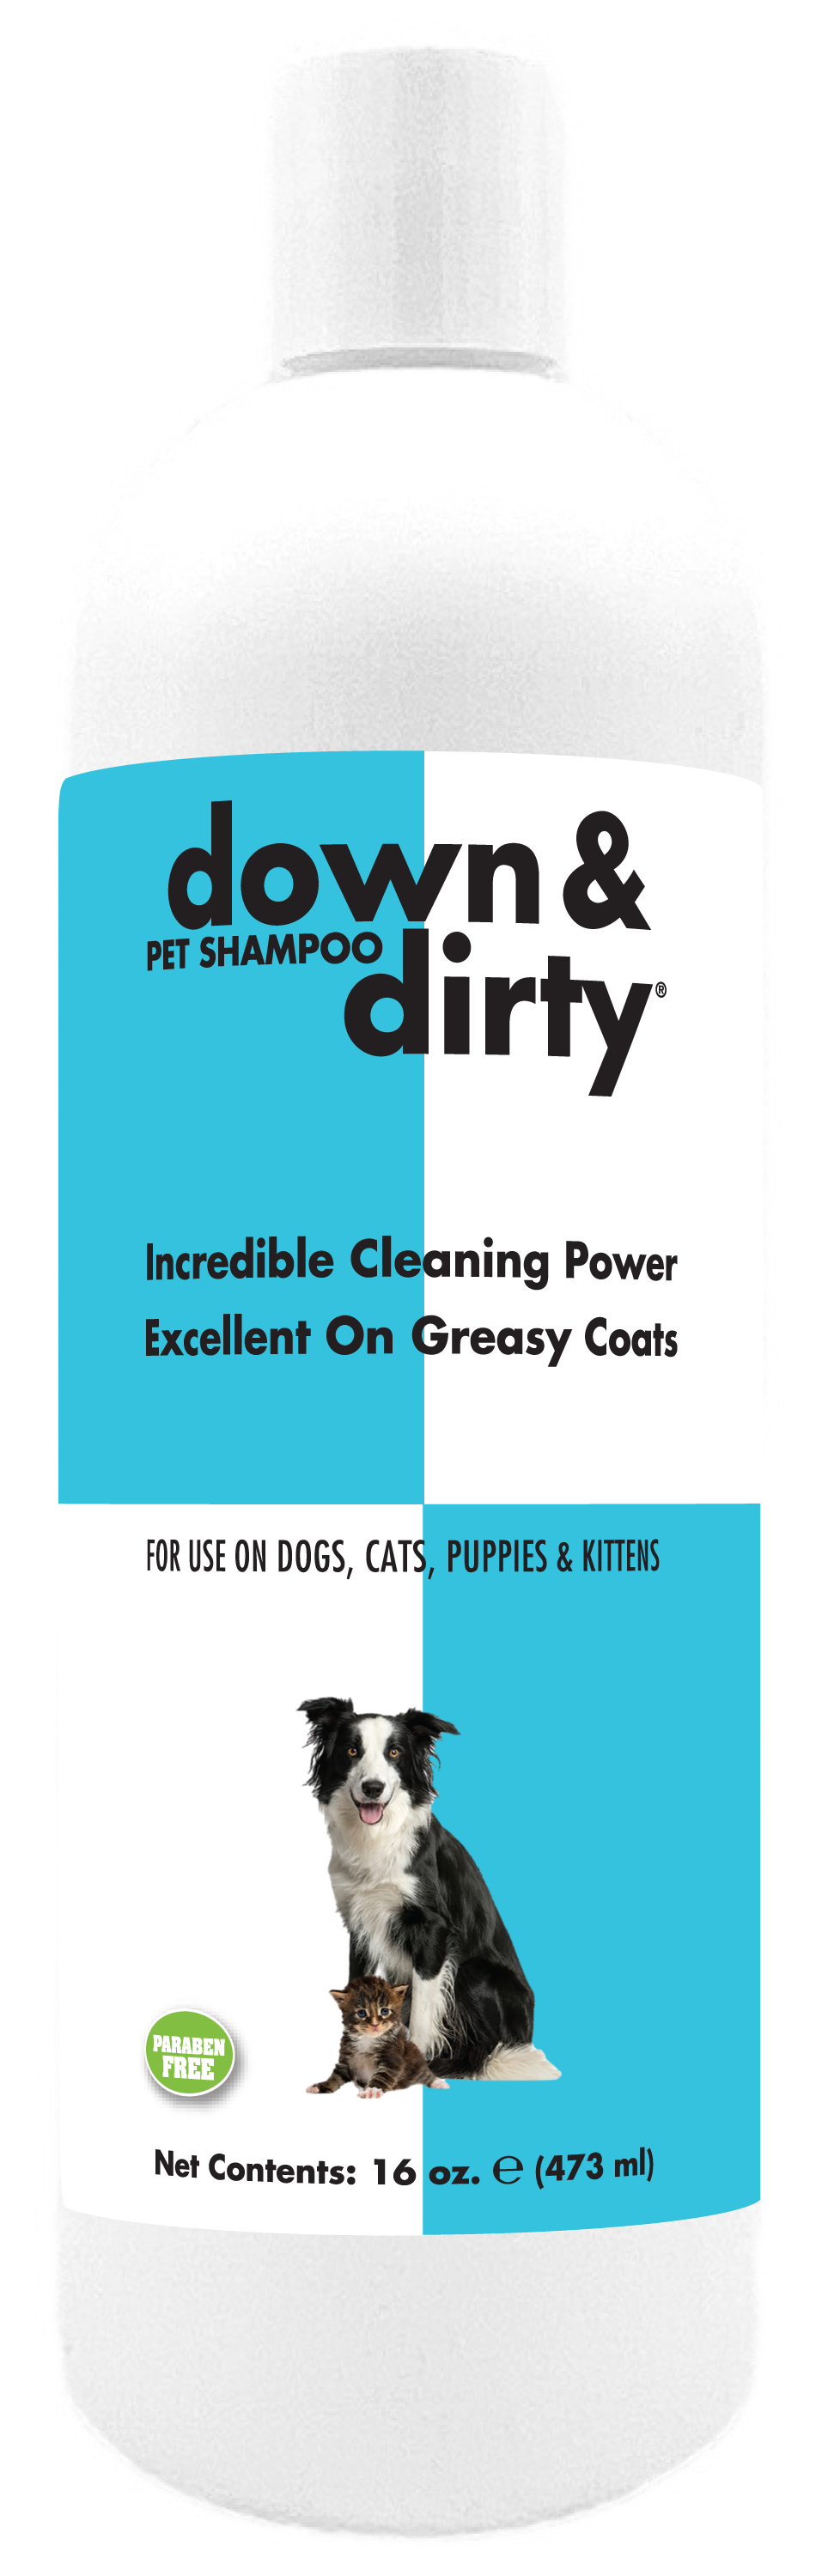 Down & Dirty® Pet Shampoo